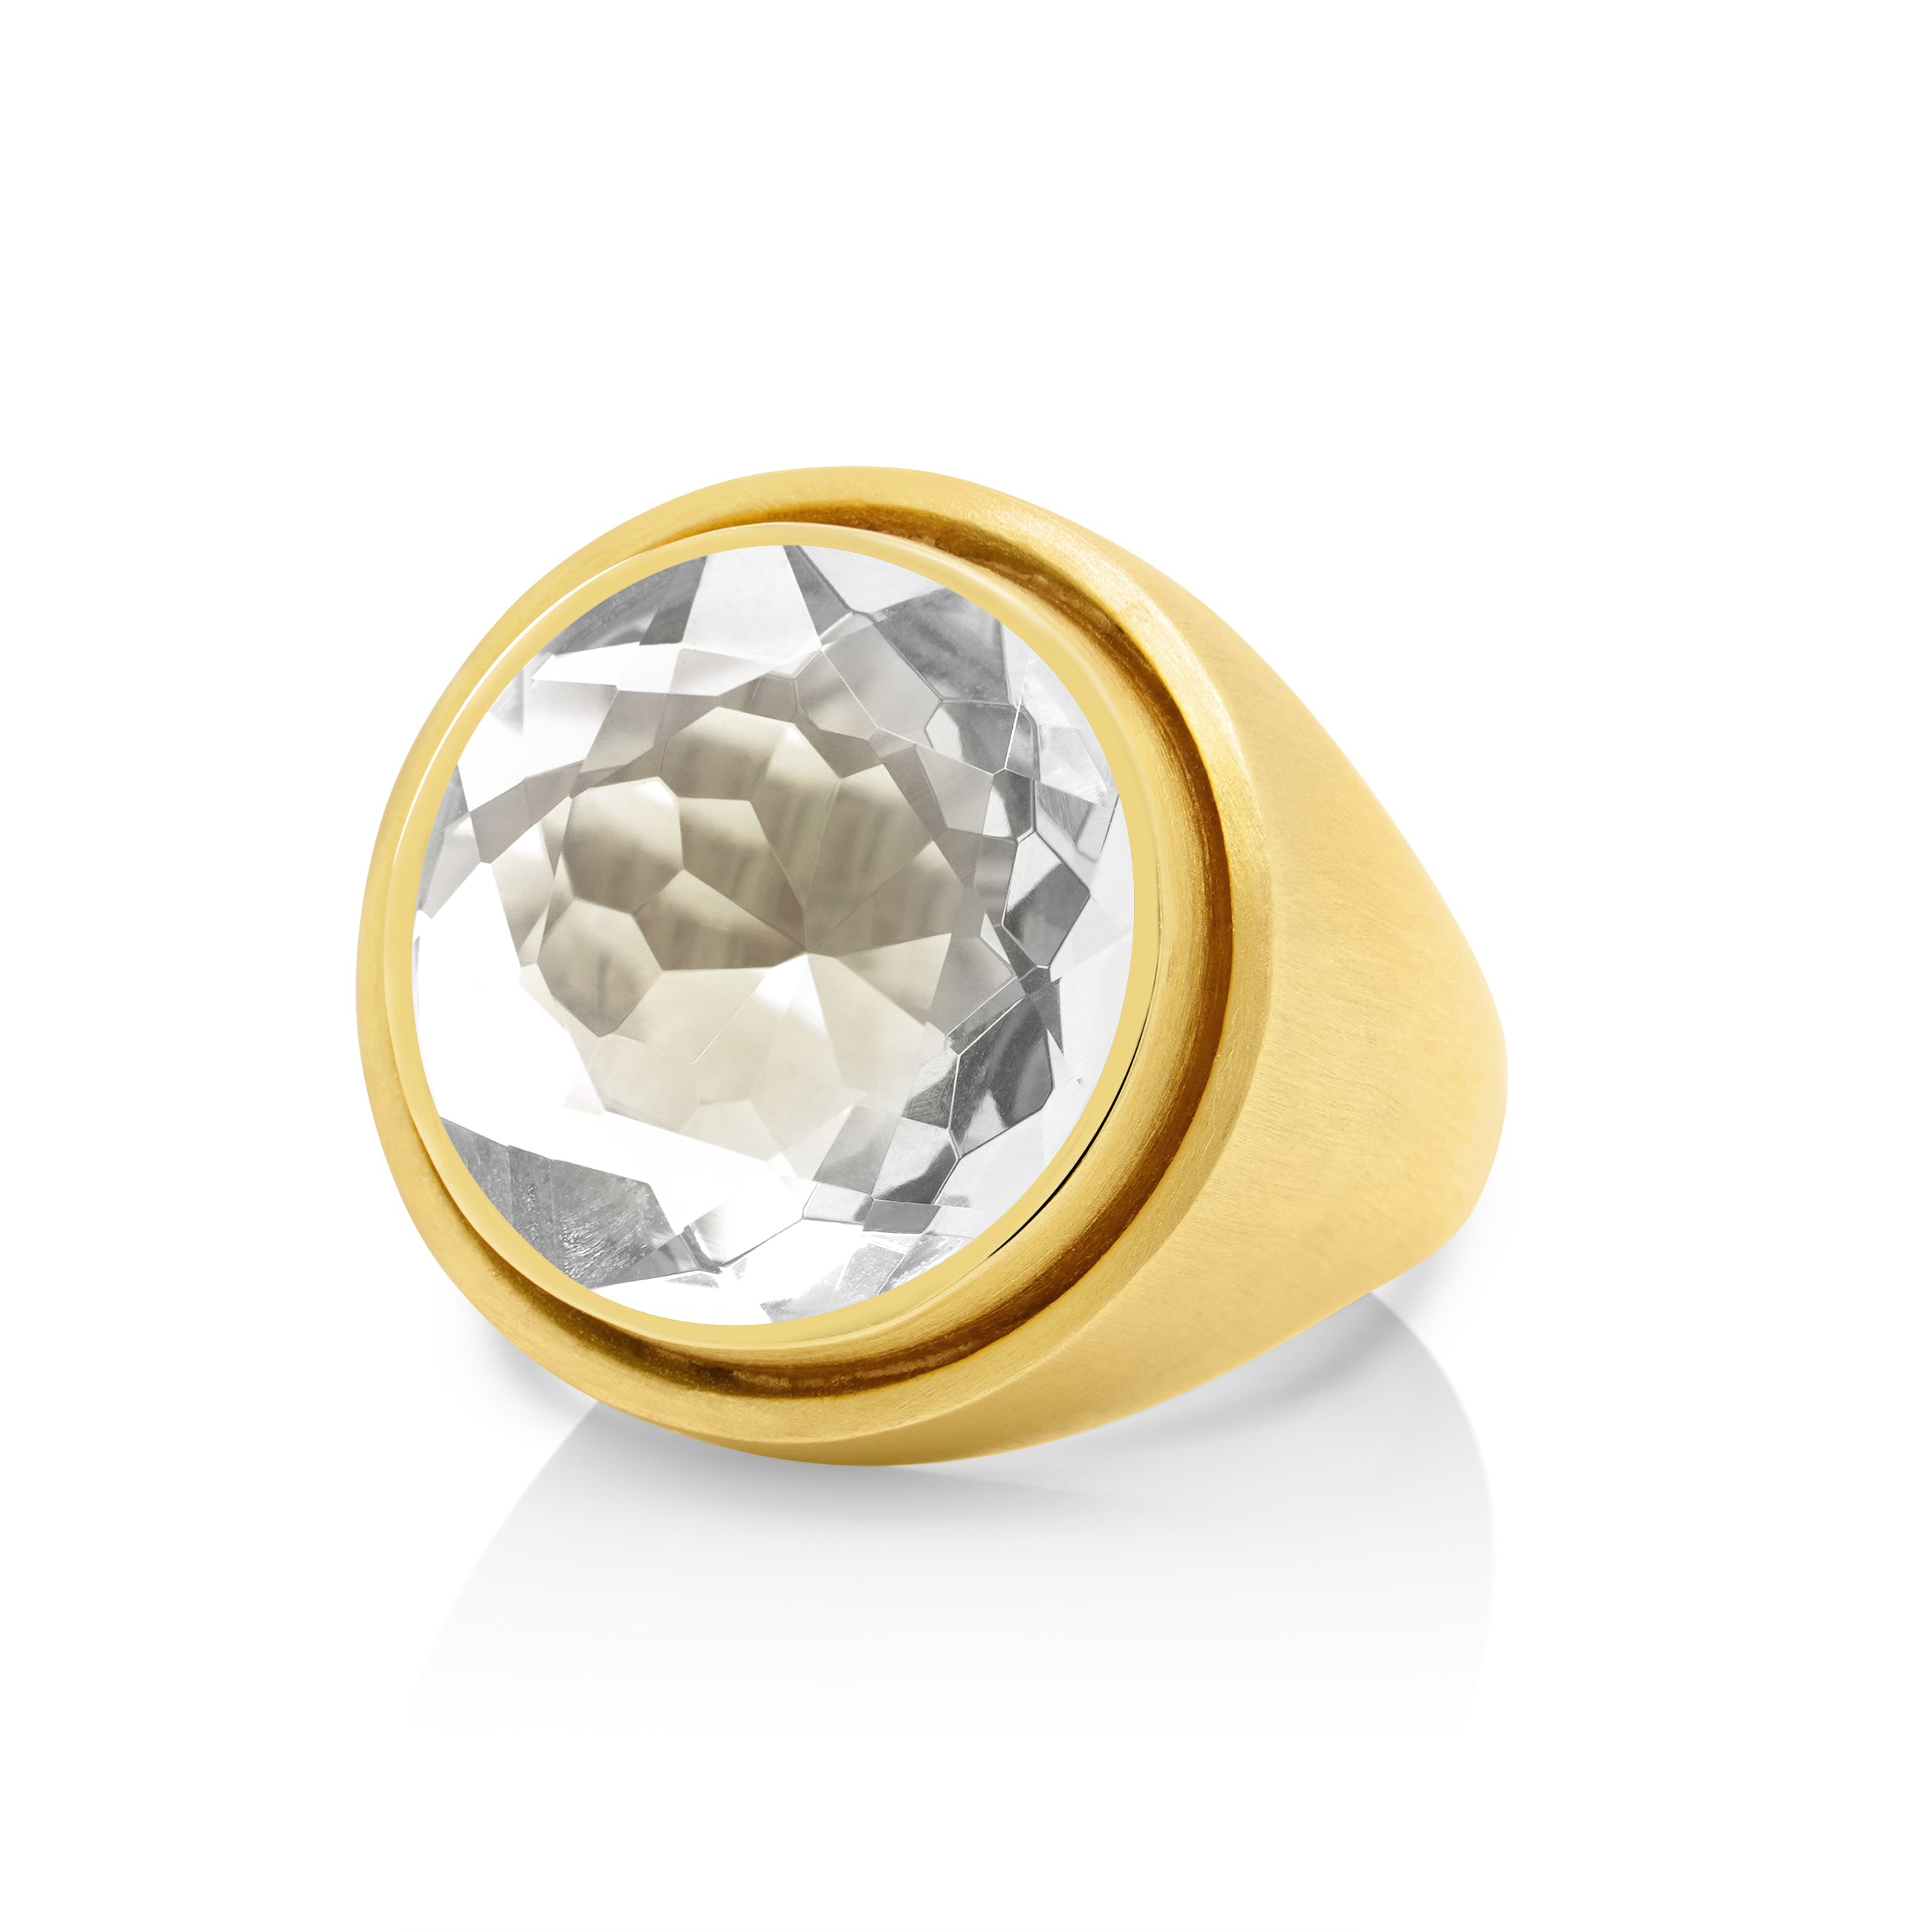 Dean Davidson - Signet Ring in Gold and Crystal Quartz